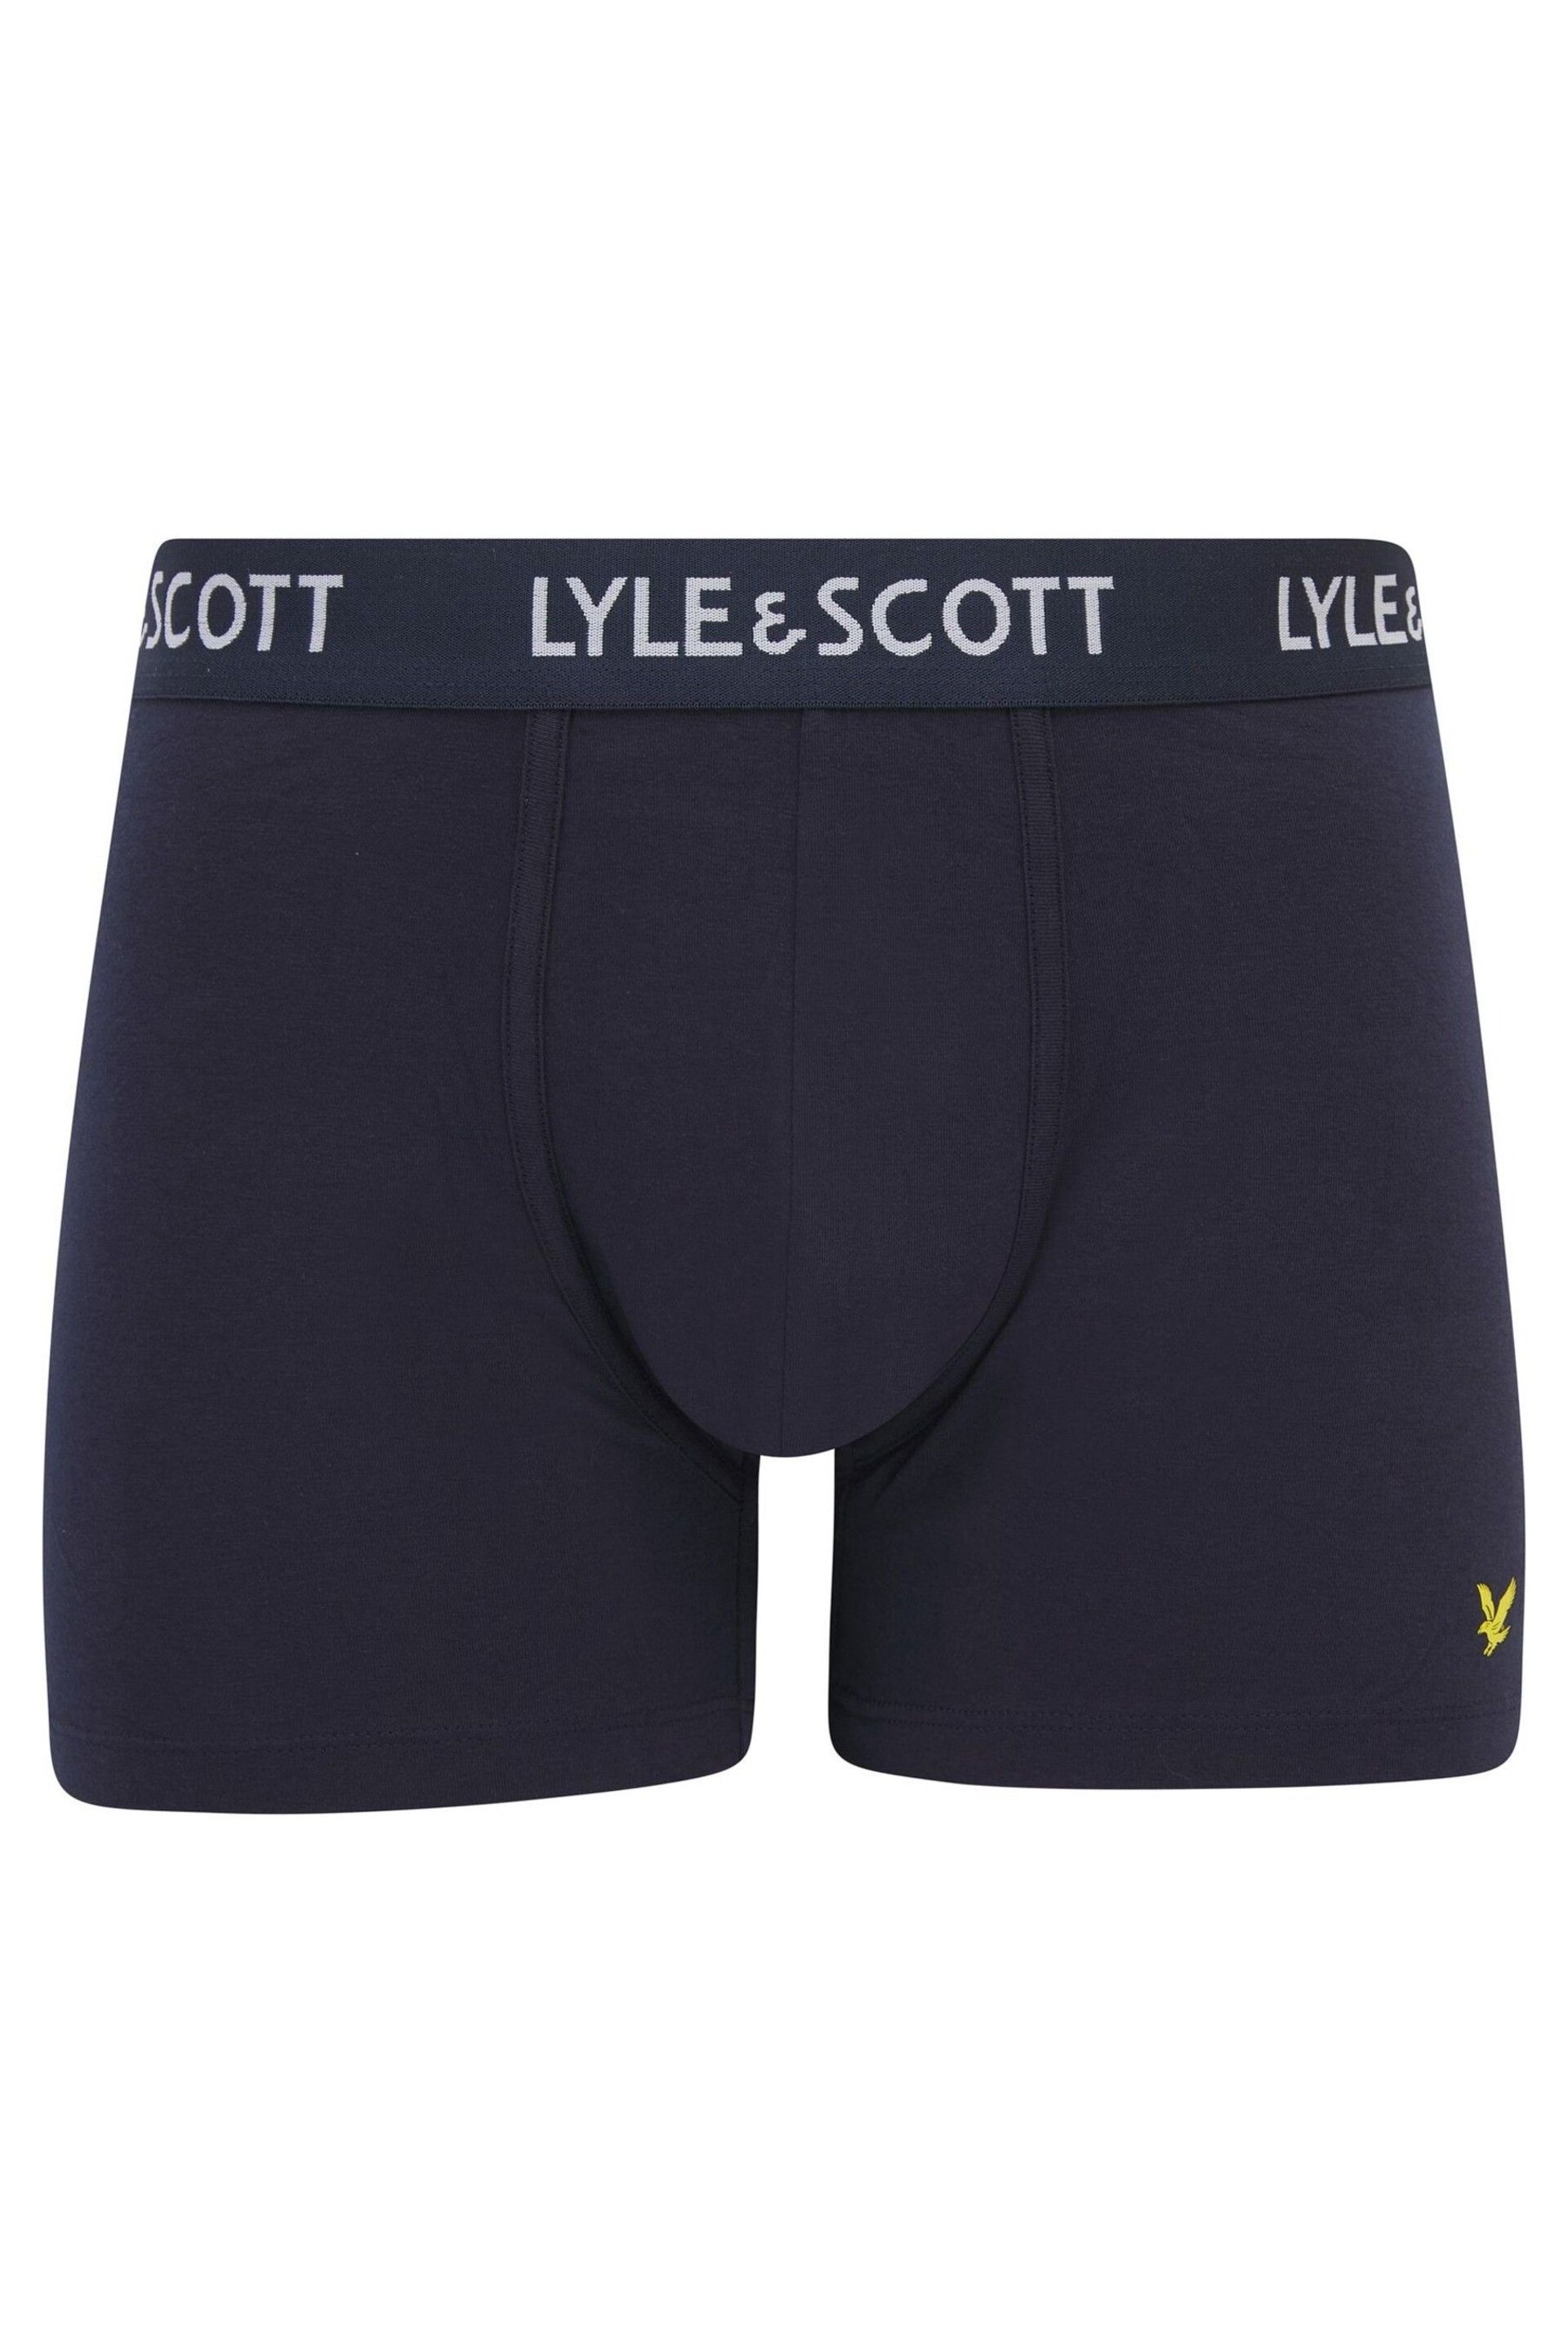 Lyle & Scott Blue Ethan Premium Underwear Trunks 3 Pack - Image 2 of 4